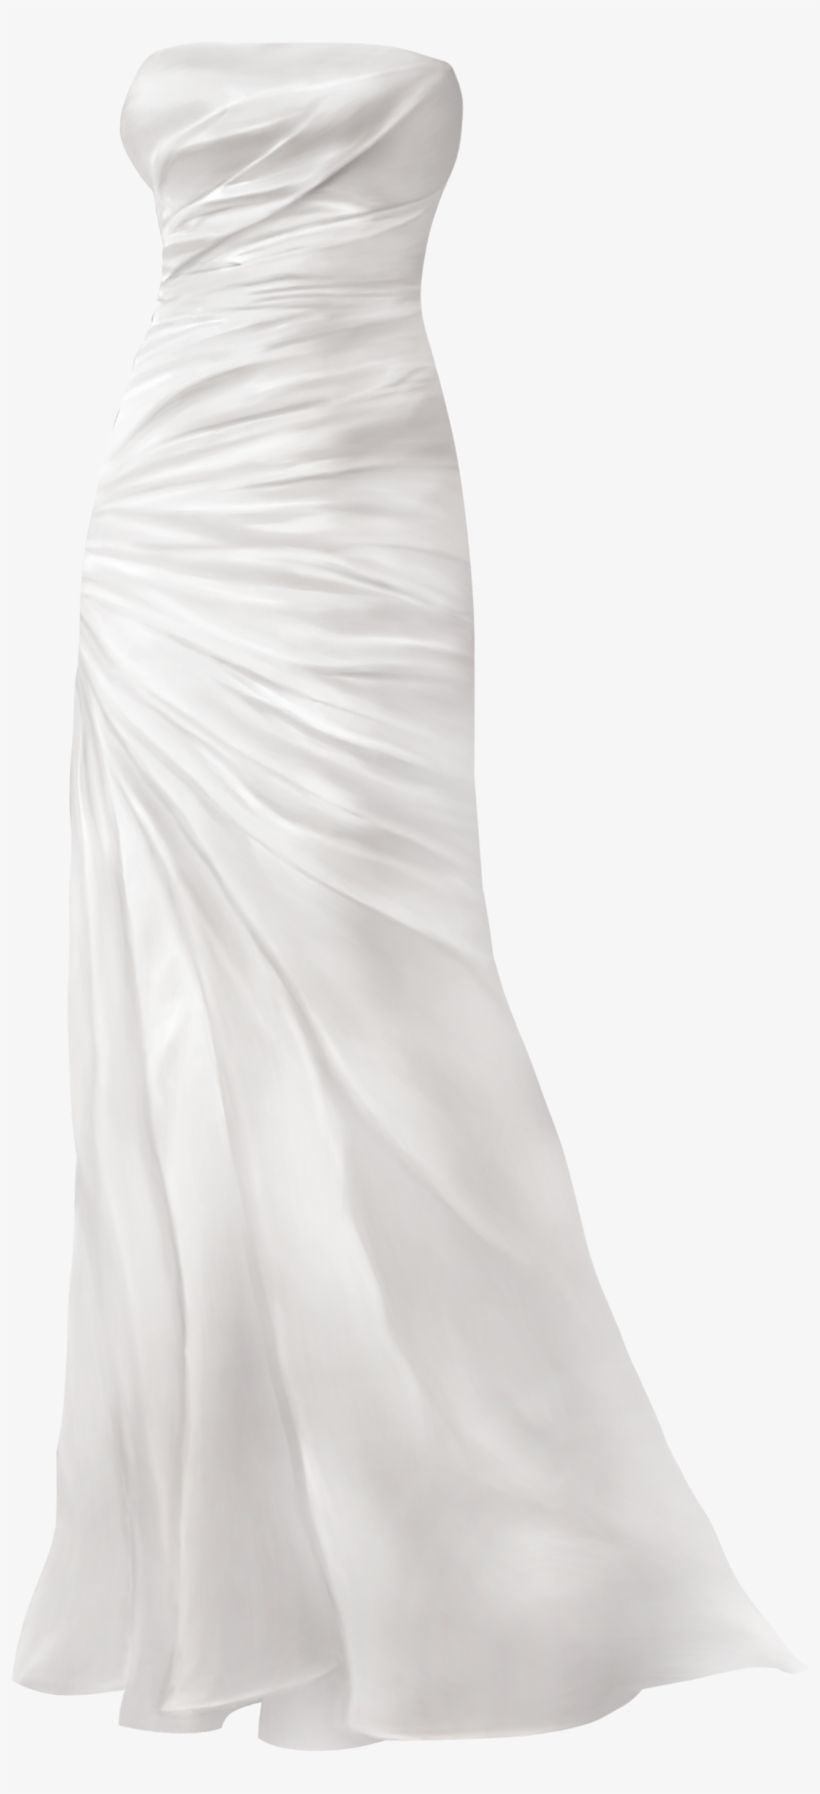 Simple Wedding Dress Png Clip Art - Clip Art, transparent png #865695